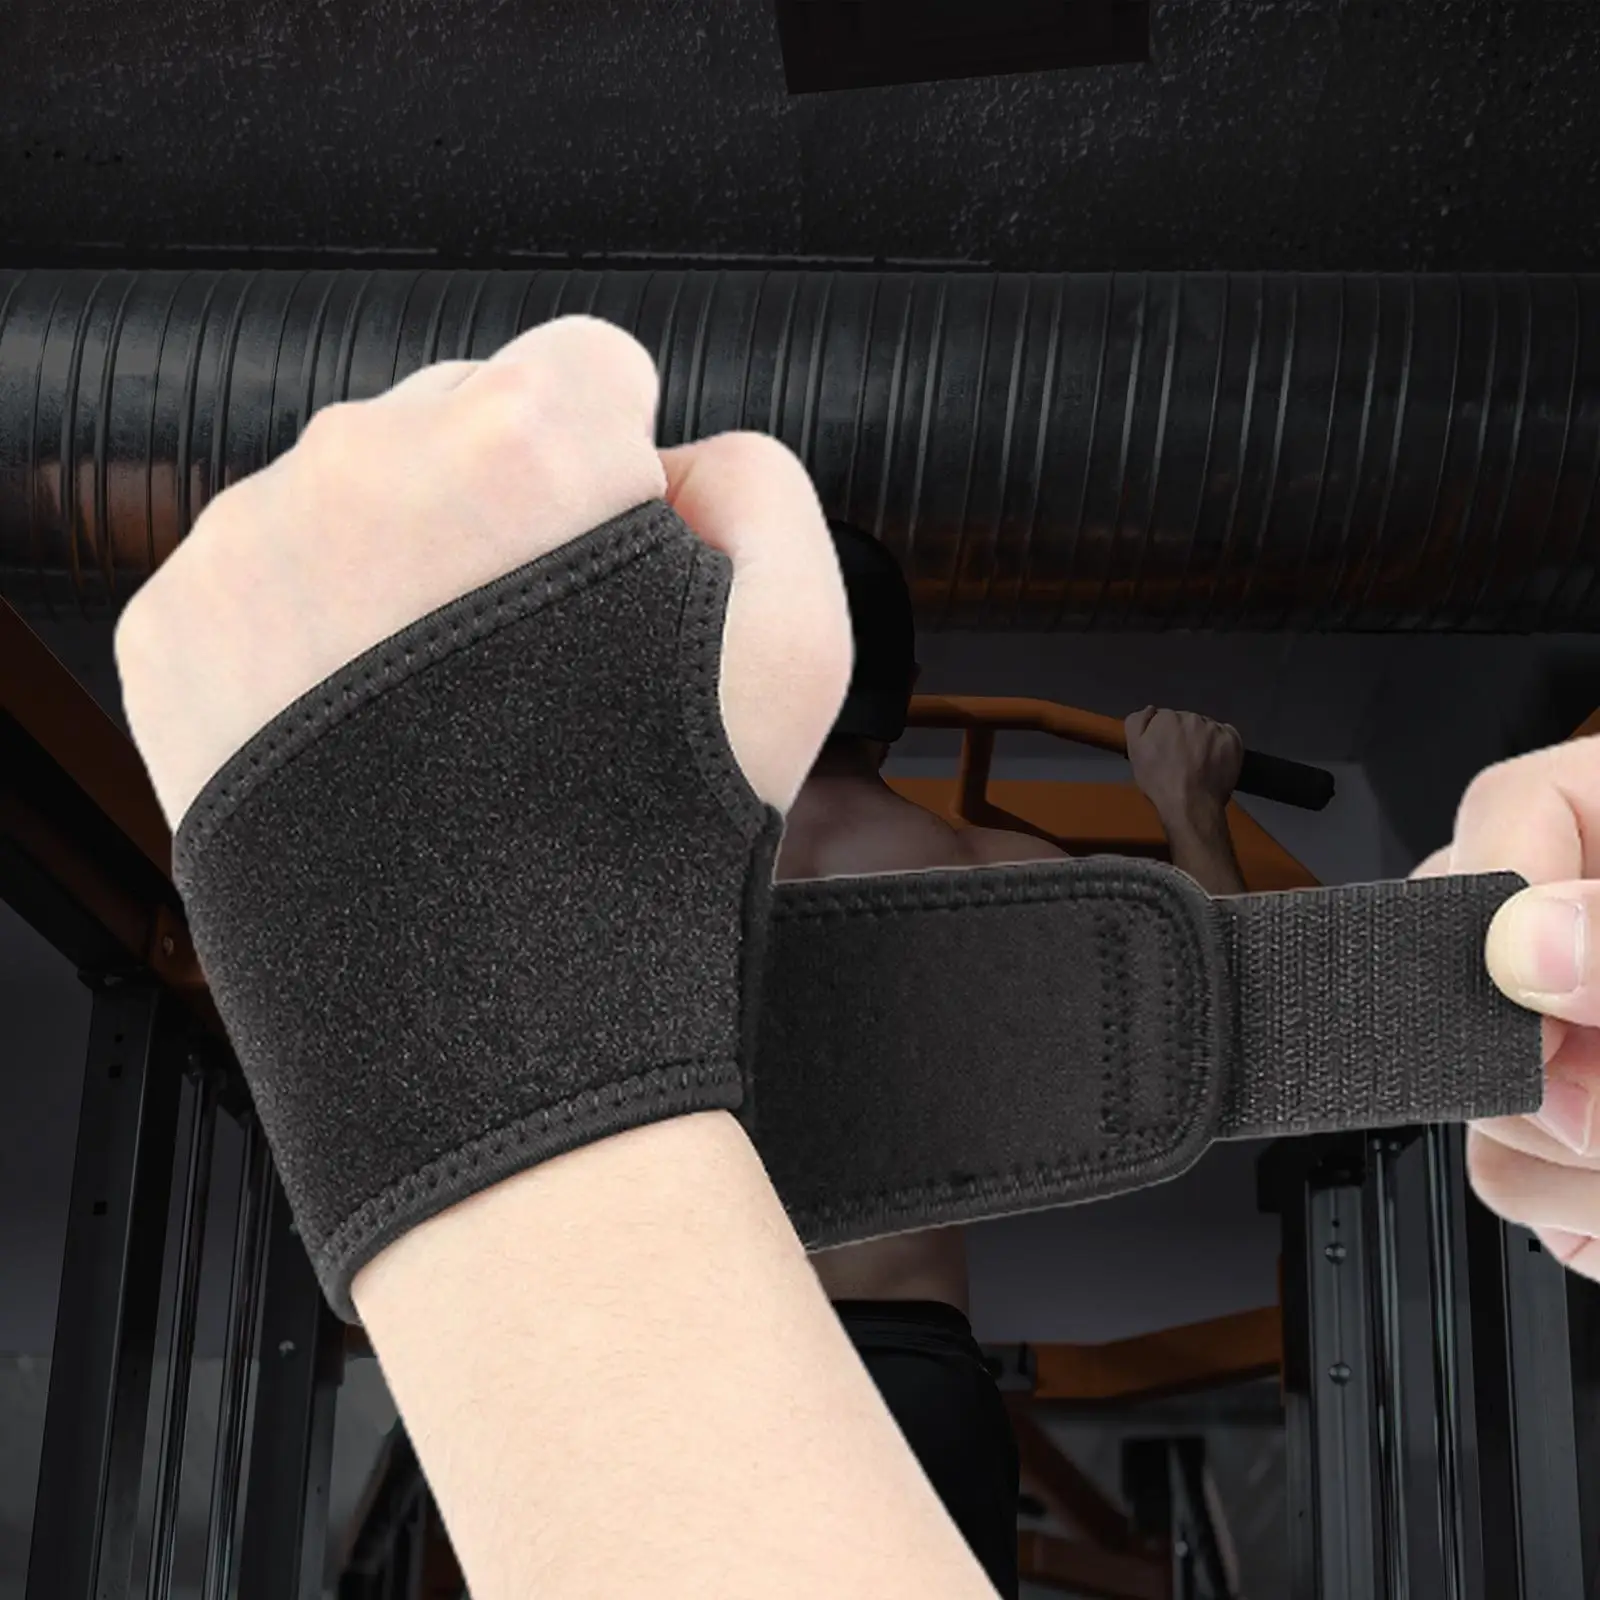 Carpal Tunnel Wrist Brace Adjustable Wrist Support Brace Wrist Compression Wrap